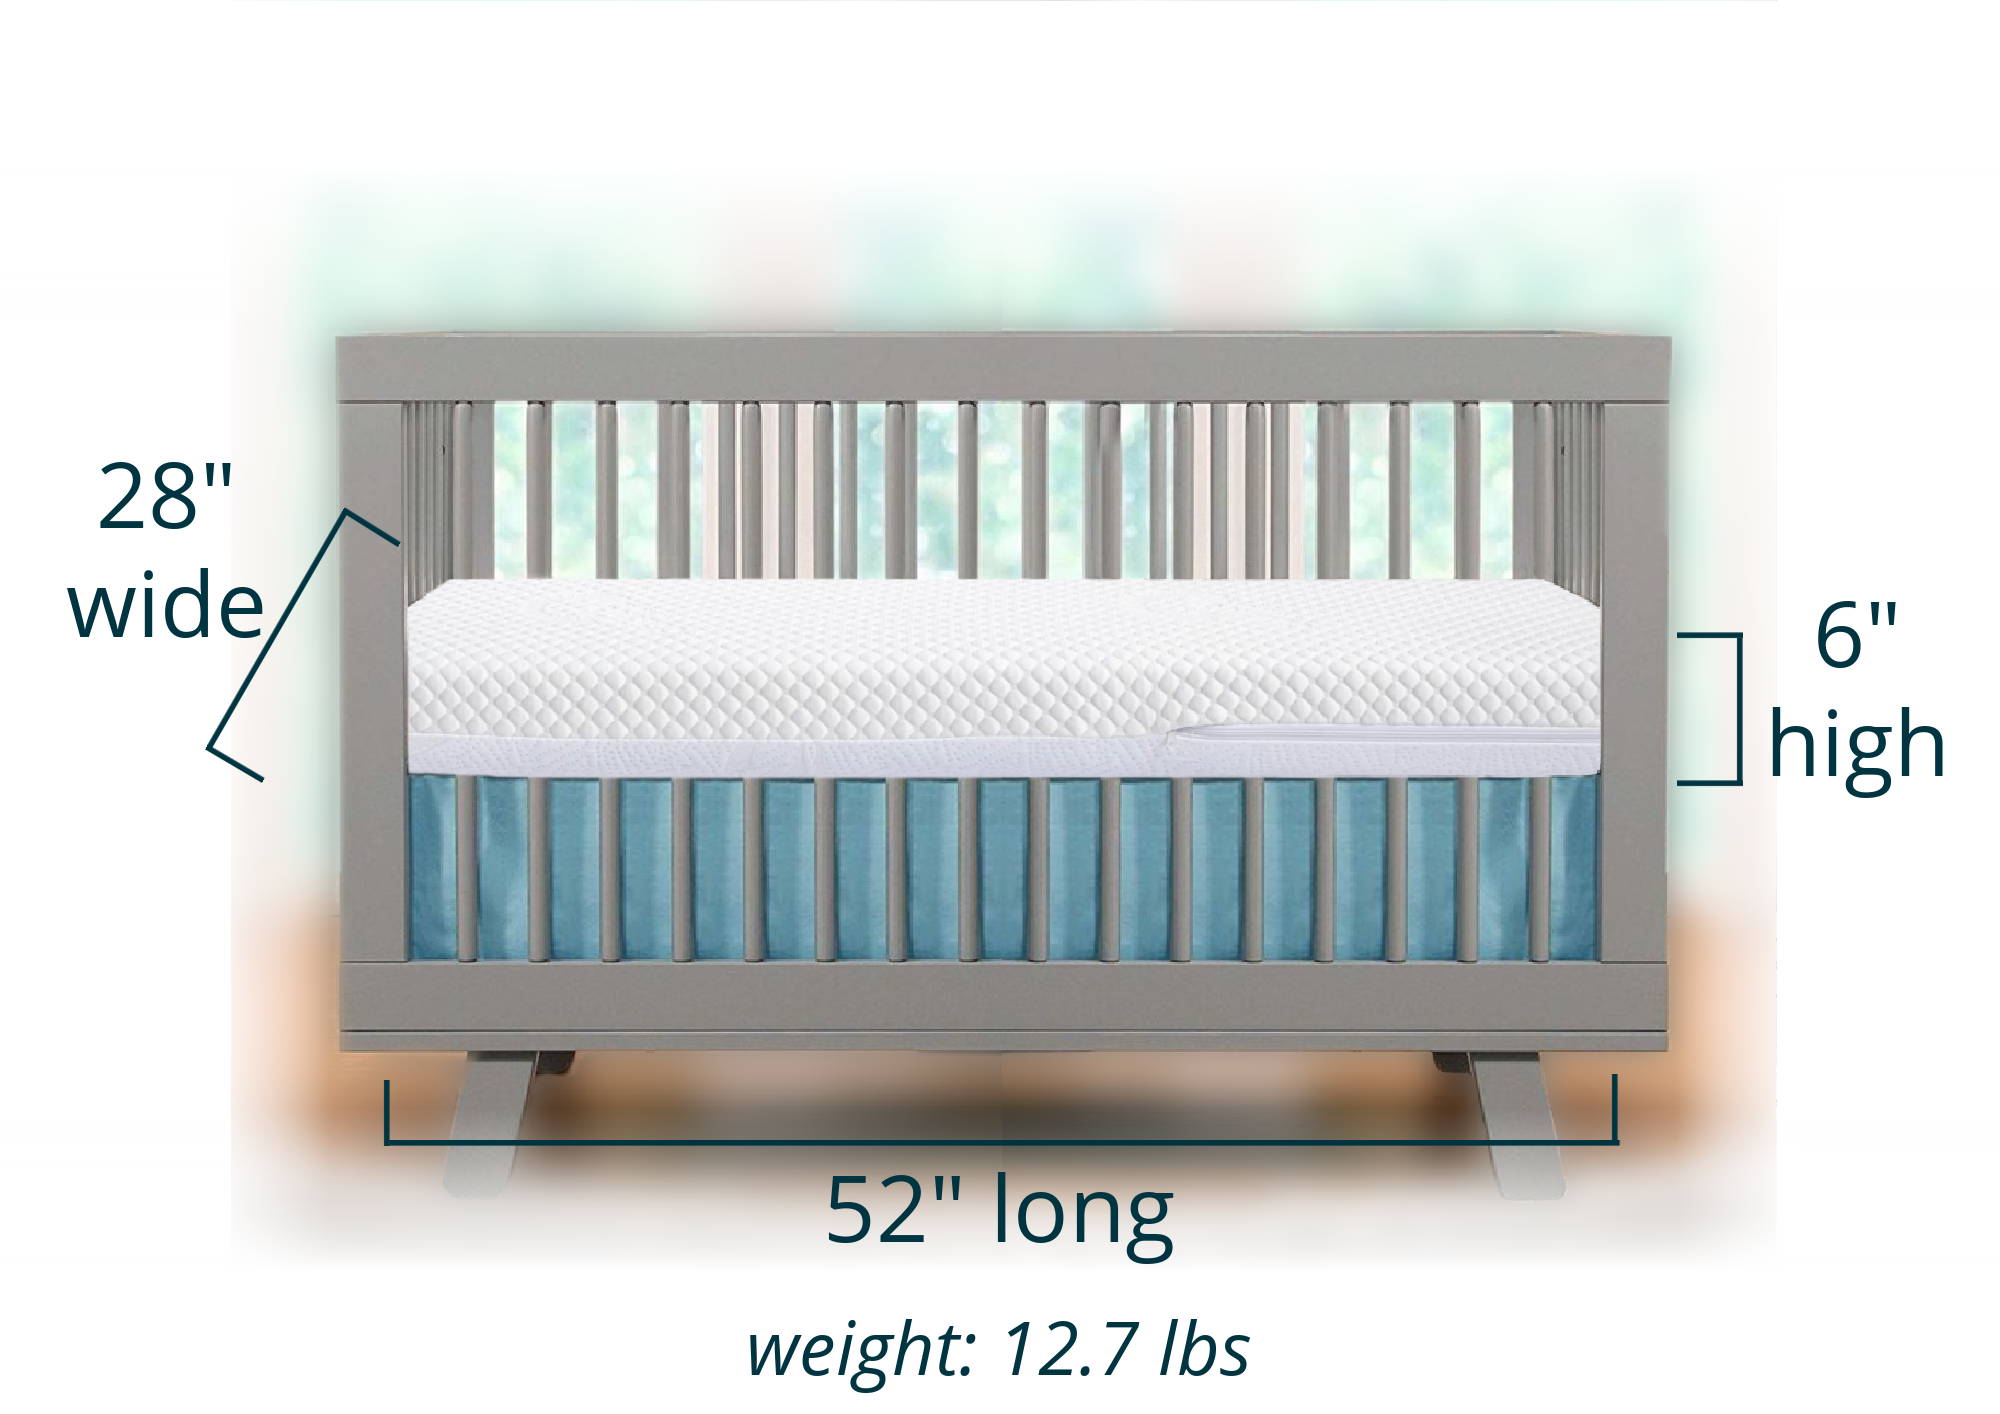 Yeti crib mattress in a crib showing dimensions of 28